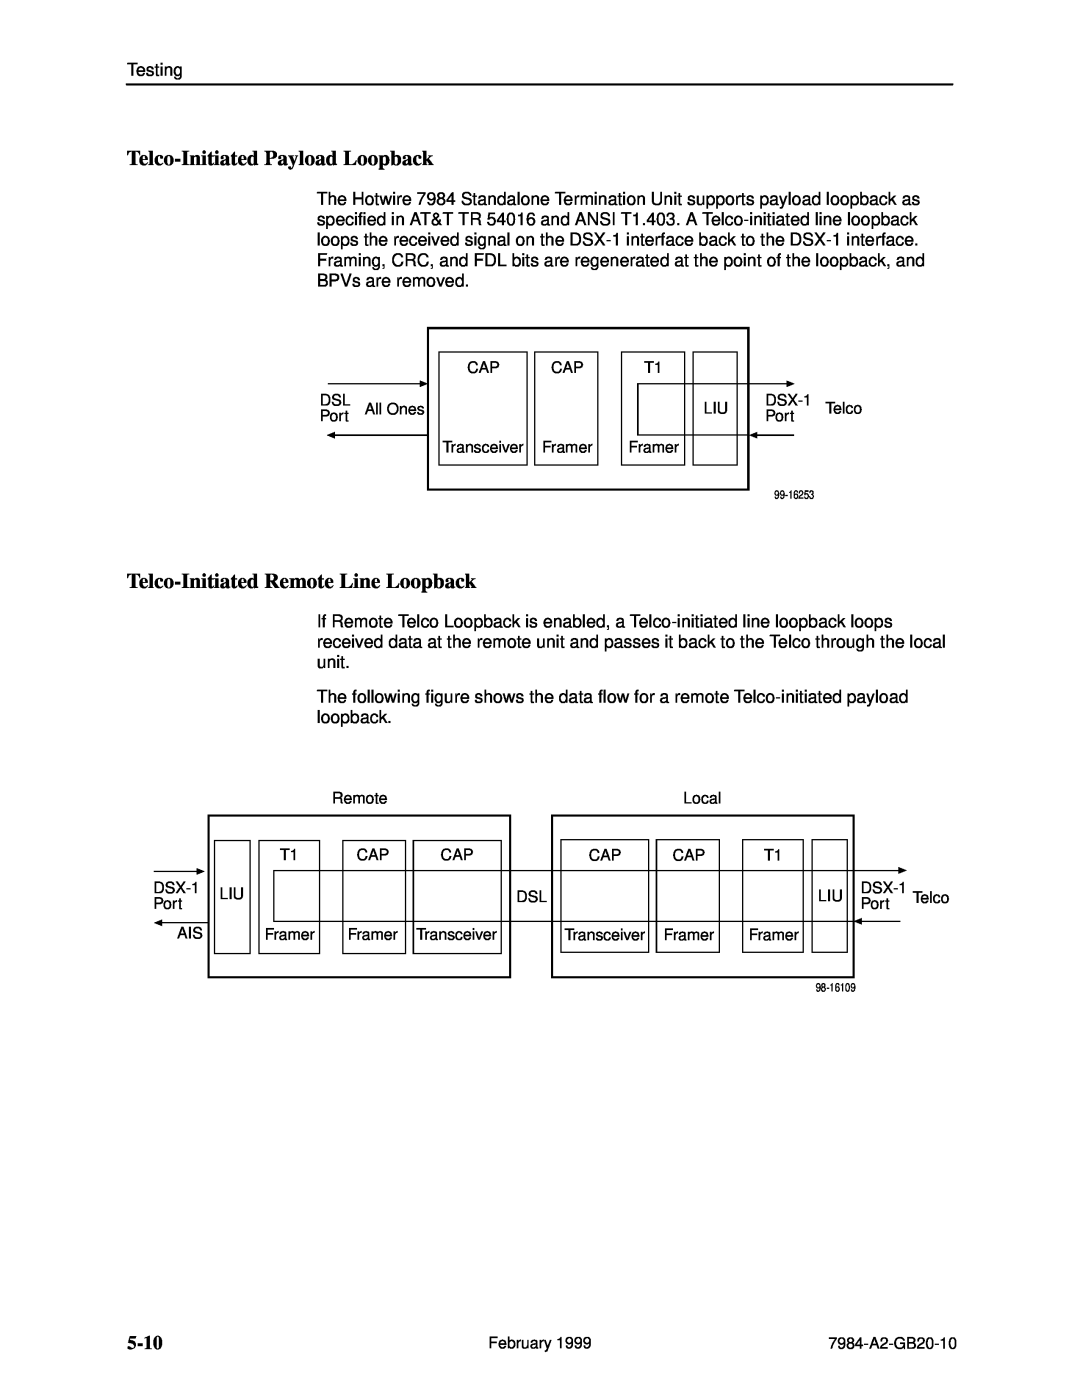 Paradyne Hotwire 7984 manual Telco-Initiated Payload Loopback, Telco-Initiated Remote Line Loopback, 5-10 